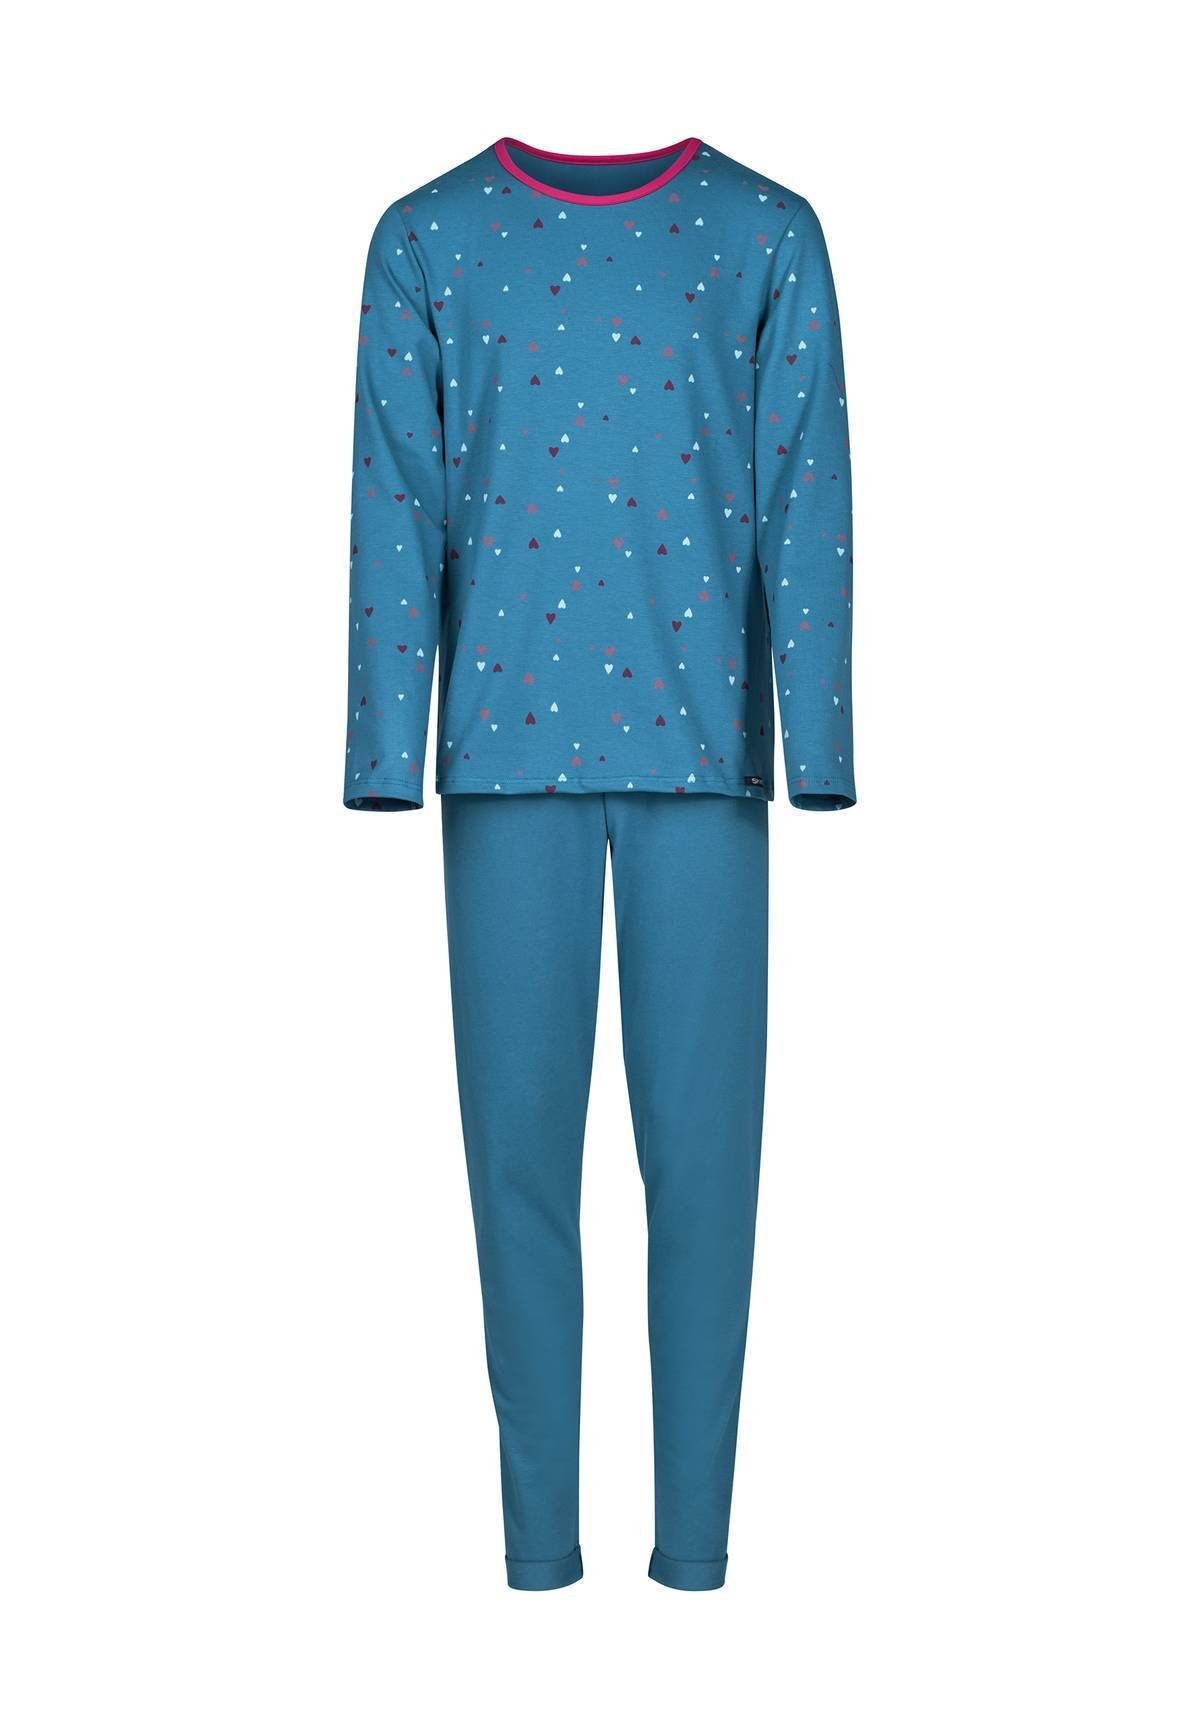 Skiny Pyjama Mädchen Schlafanzug Set - lang, Kinder, 2-tlg. Blau